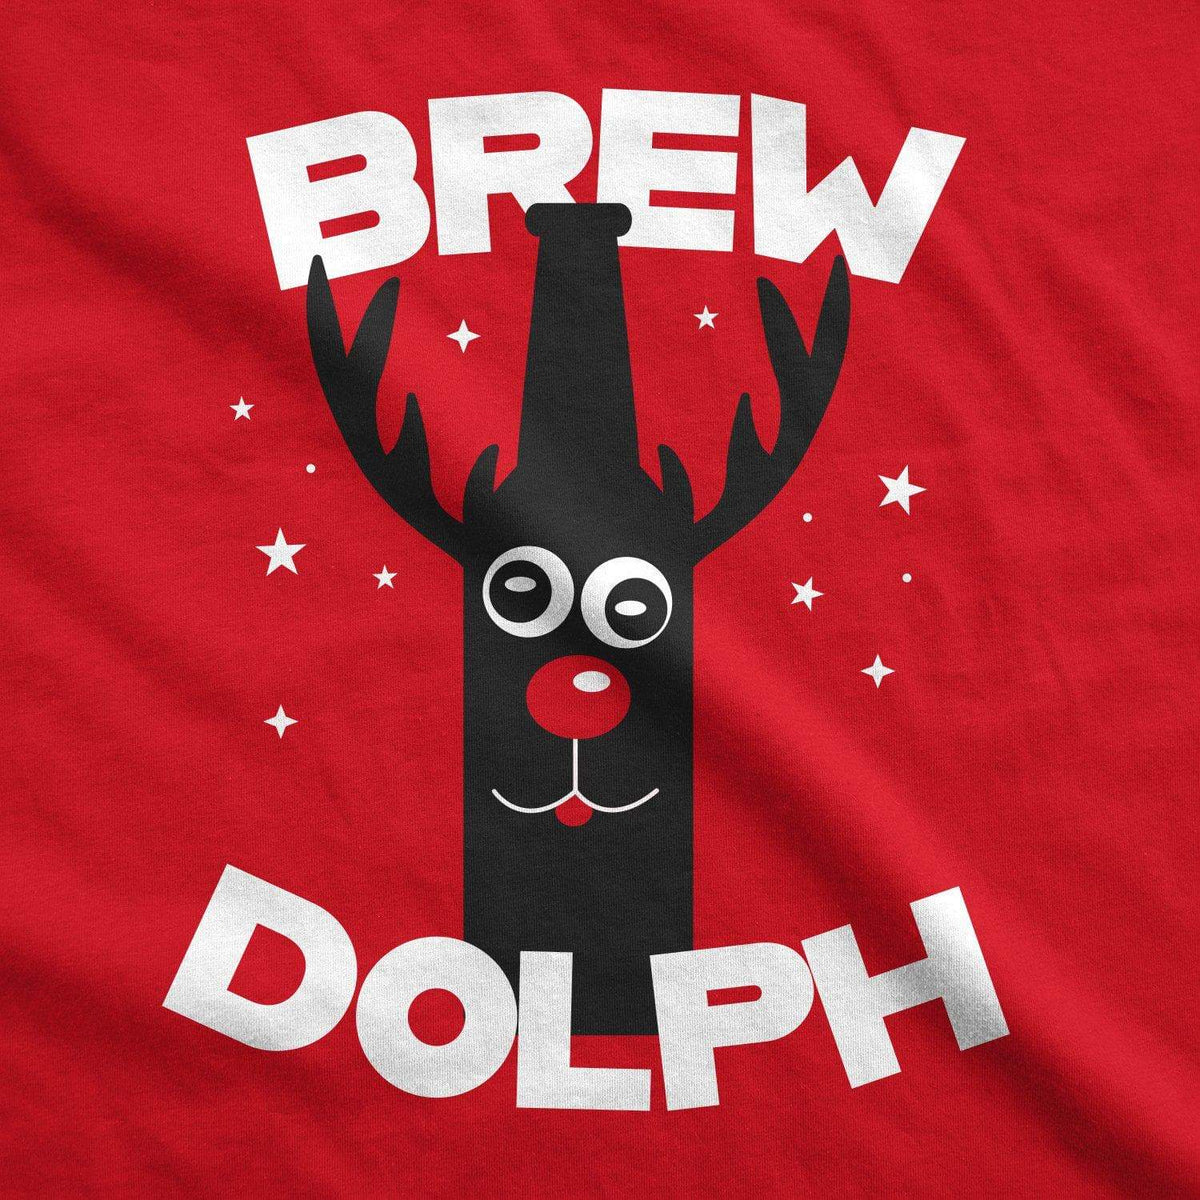 Brew Dolph Men&#39;s Tshirt - Crazy Dog T-Shirts